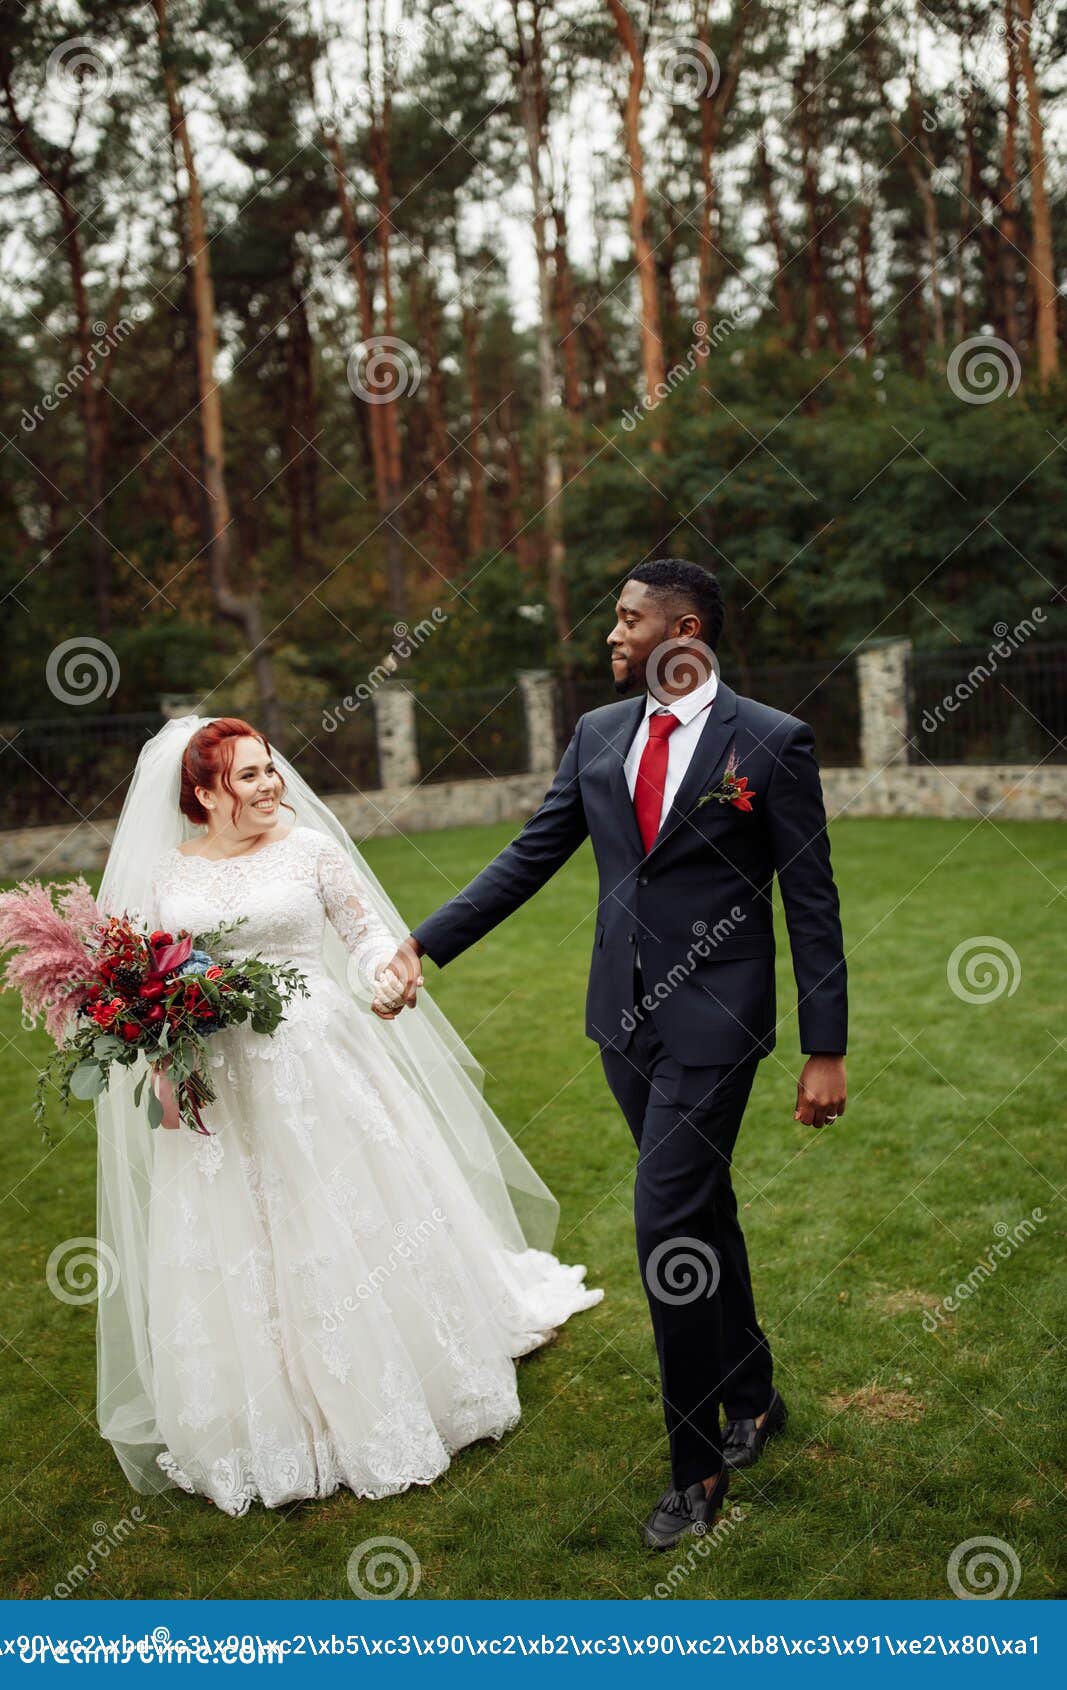 https://thumbs.dreamstime.com/z/joyful-couple-walking-park-handsome-african-american-man-lovely-white-woman-wedding-day-beautiful-bride-charming-213808394.jpg